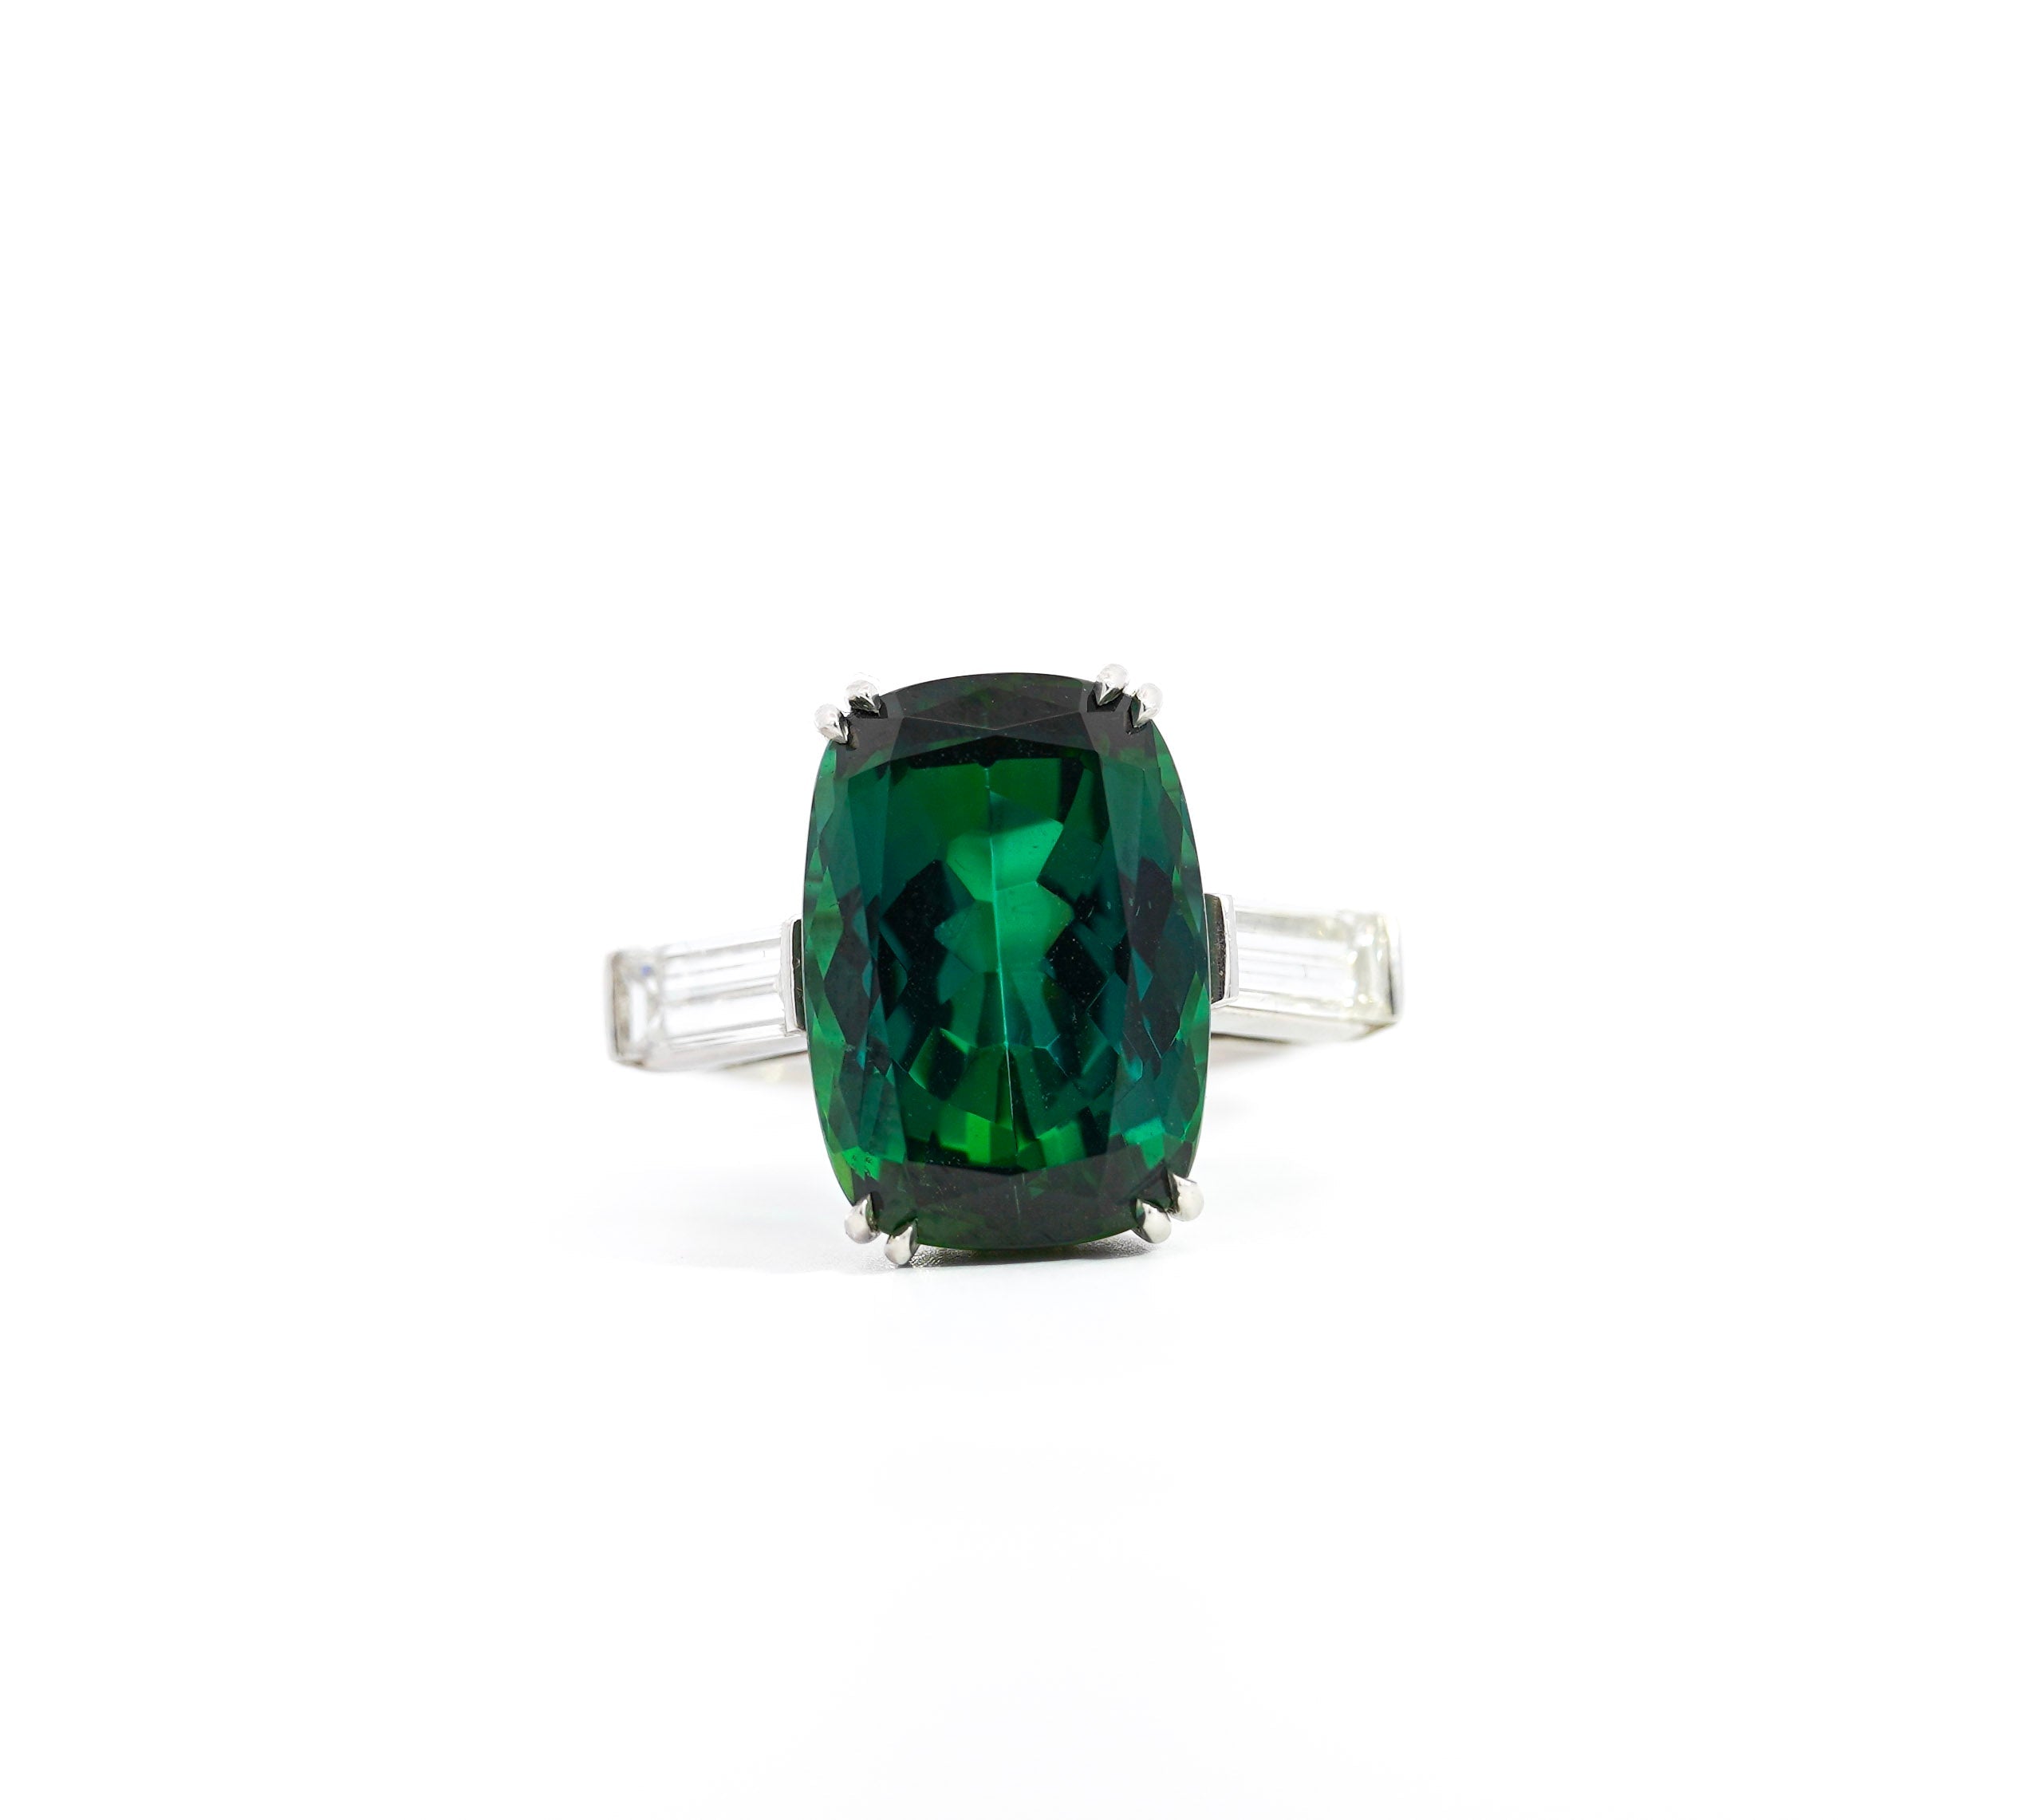 12_68-Carat-Zoisite-Green-Tanzanite-Diamond-Ring-in-Platinum-950-IGI-Certified-Rings.jpg